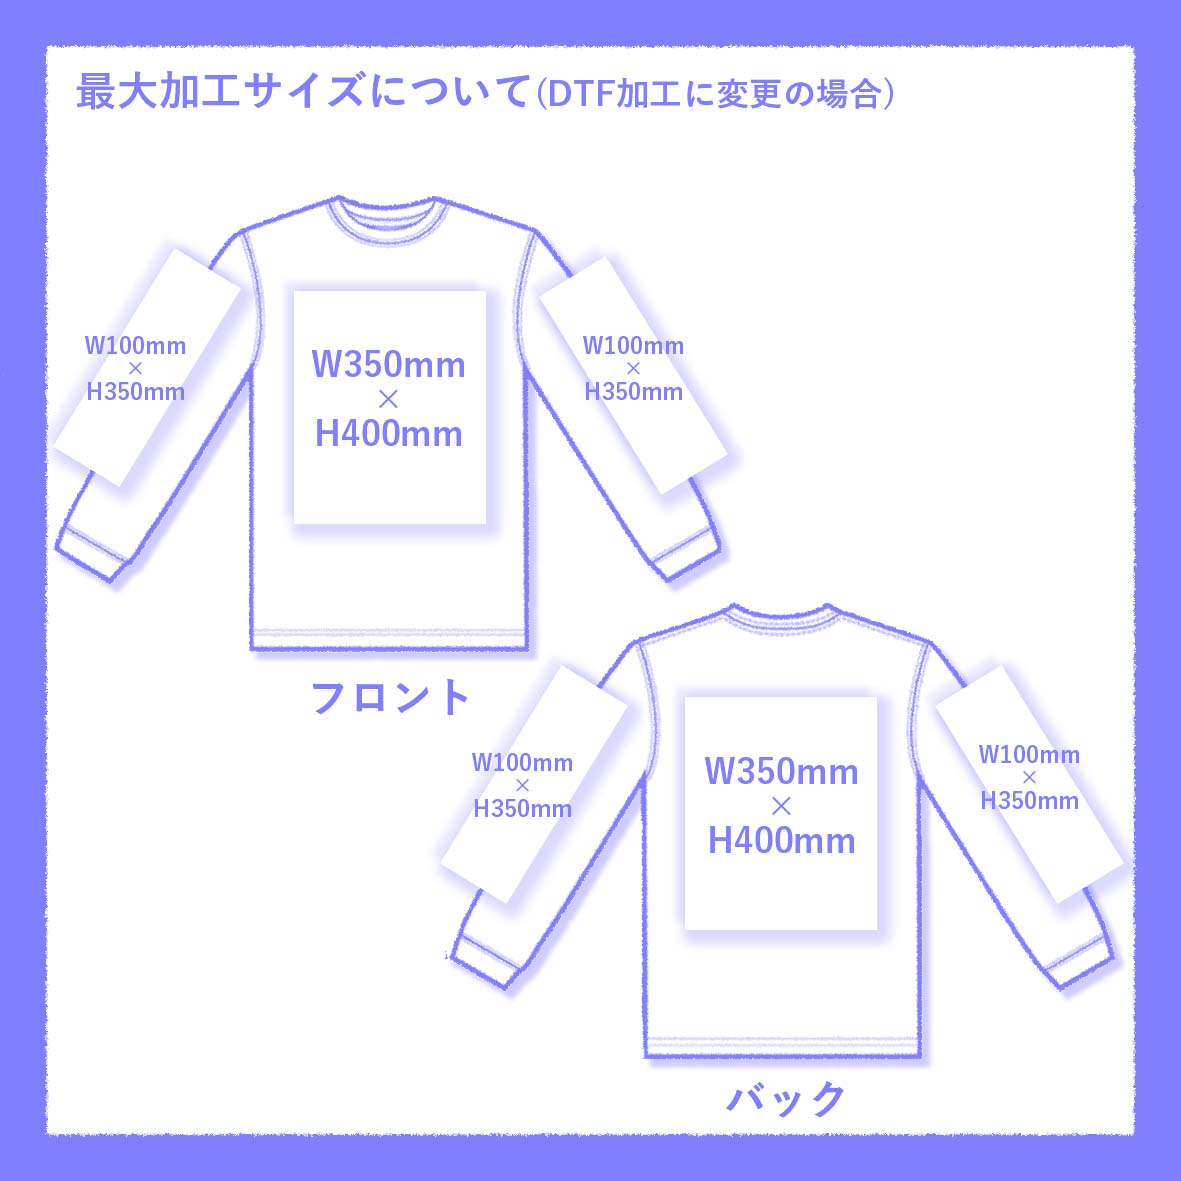 GILDAN ギルダン 4.5 oz ソフトスタイルリングスパン長袖Tシャツ (品番6440)